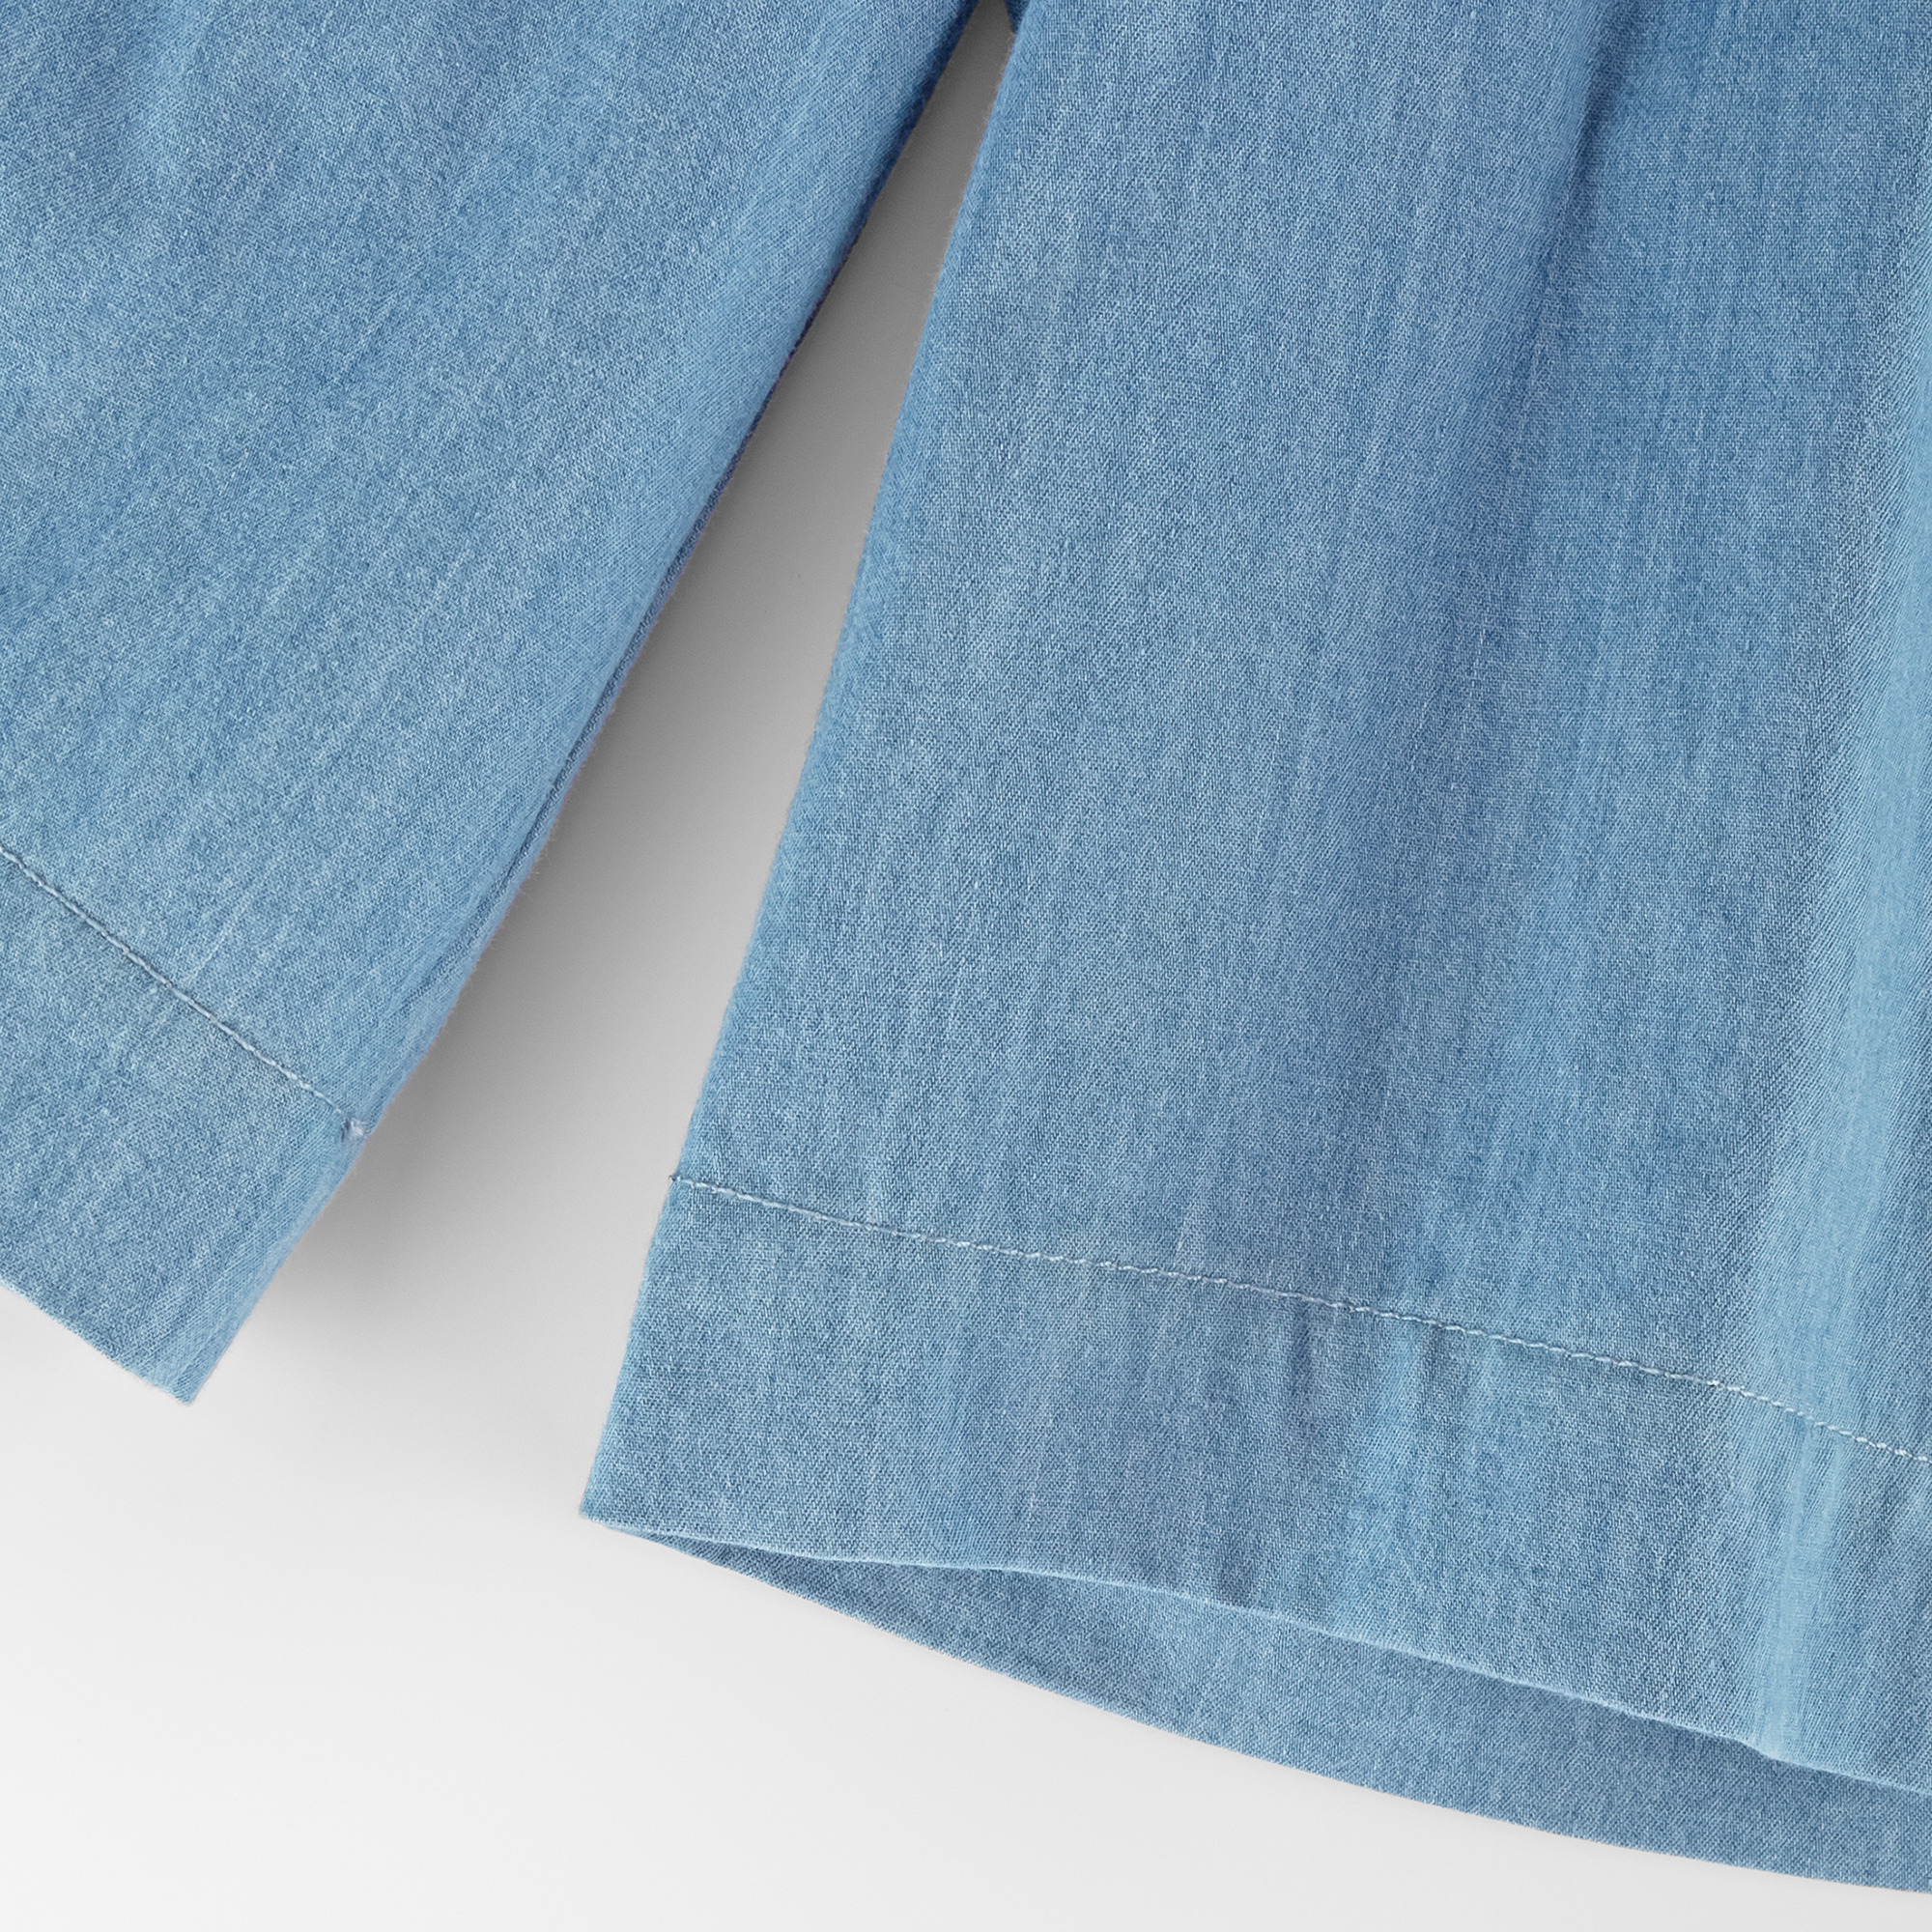 Kids' girls' culottes bermuda pants light blue